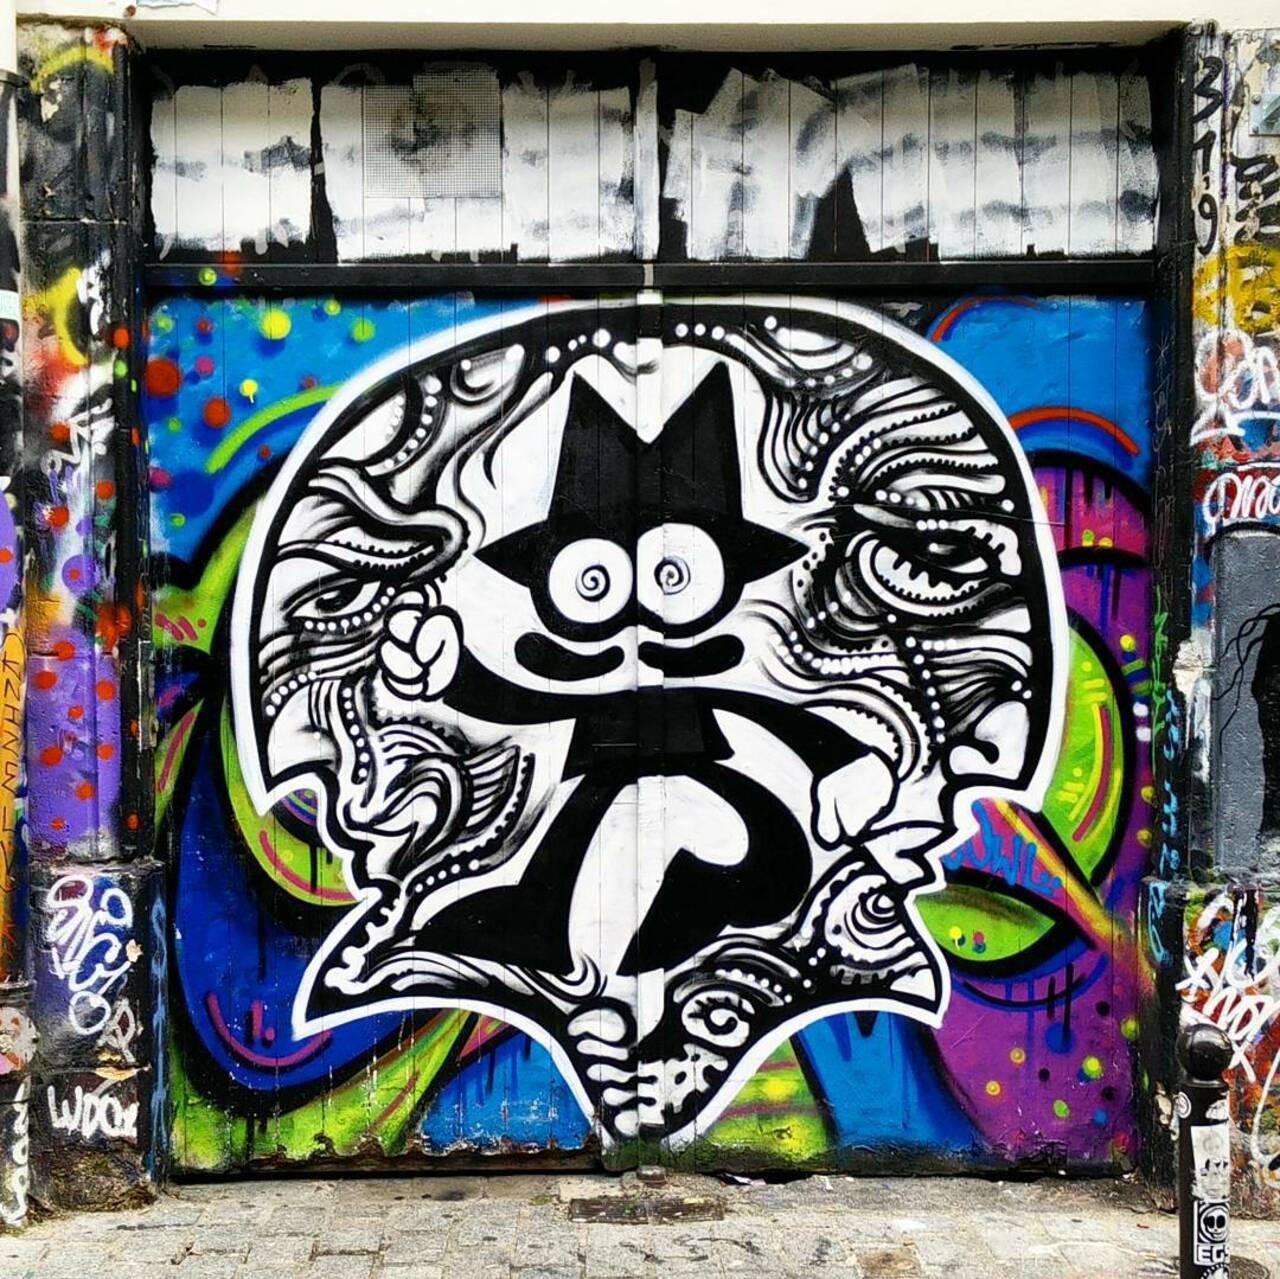 #Paris #graffiti photo by @ceky_art http://ift.tt/1jGjk3J #StreetArt https://t.co/GtJzuRCD5s